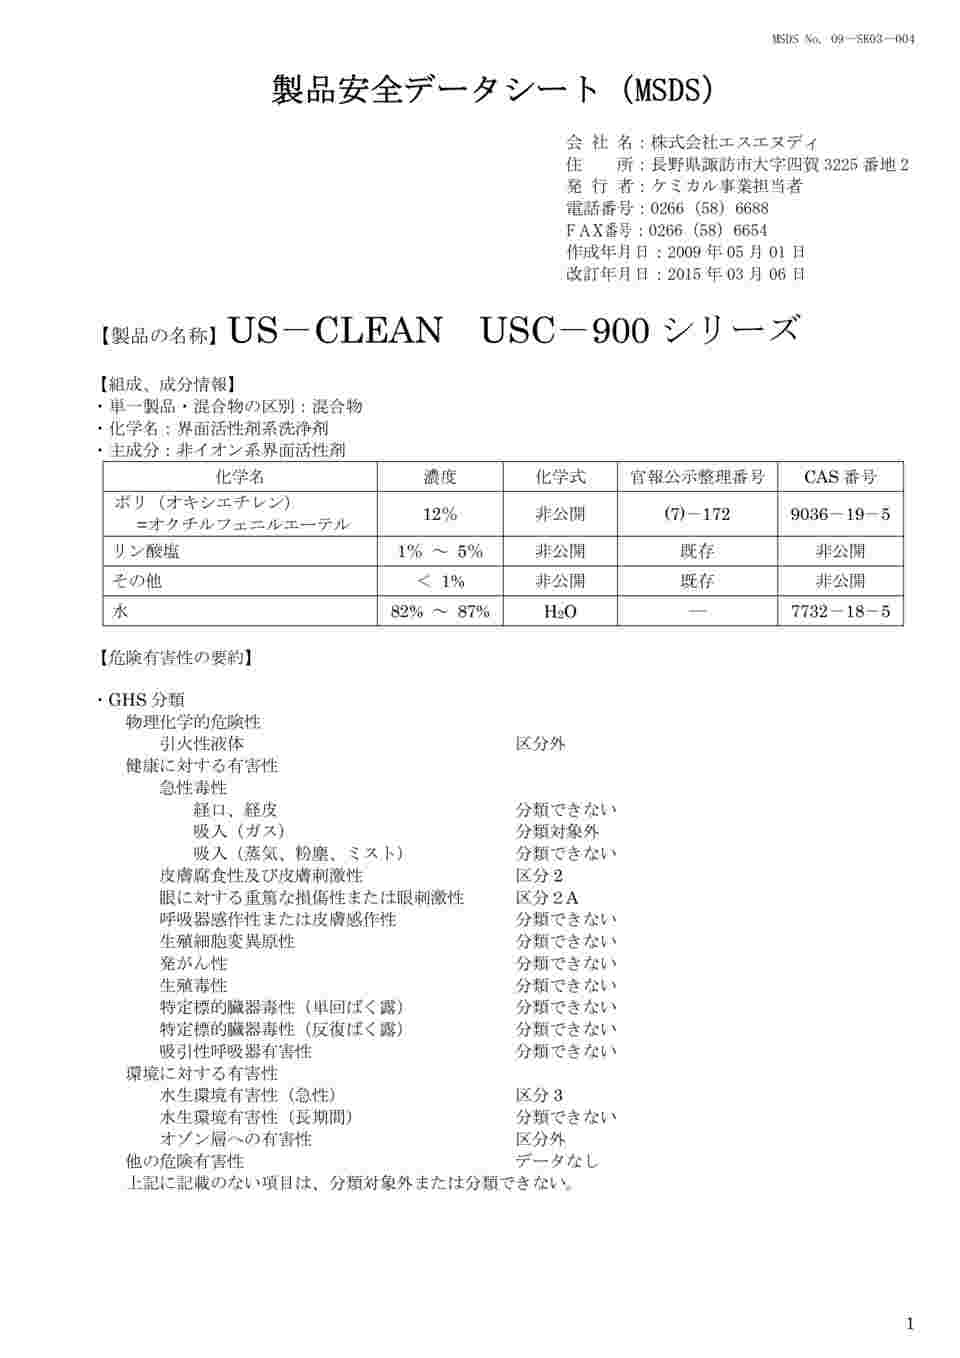 61-0084-92 US-CLEAN 水系脱脂用洗浄剤 スタンダードモデル 水溶性加工油脱脂用 USC-900シリーズ （ポリ容器タイプ） USC-904